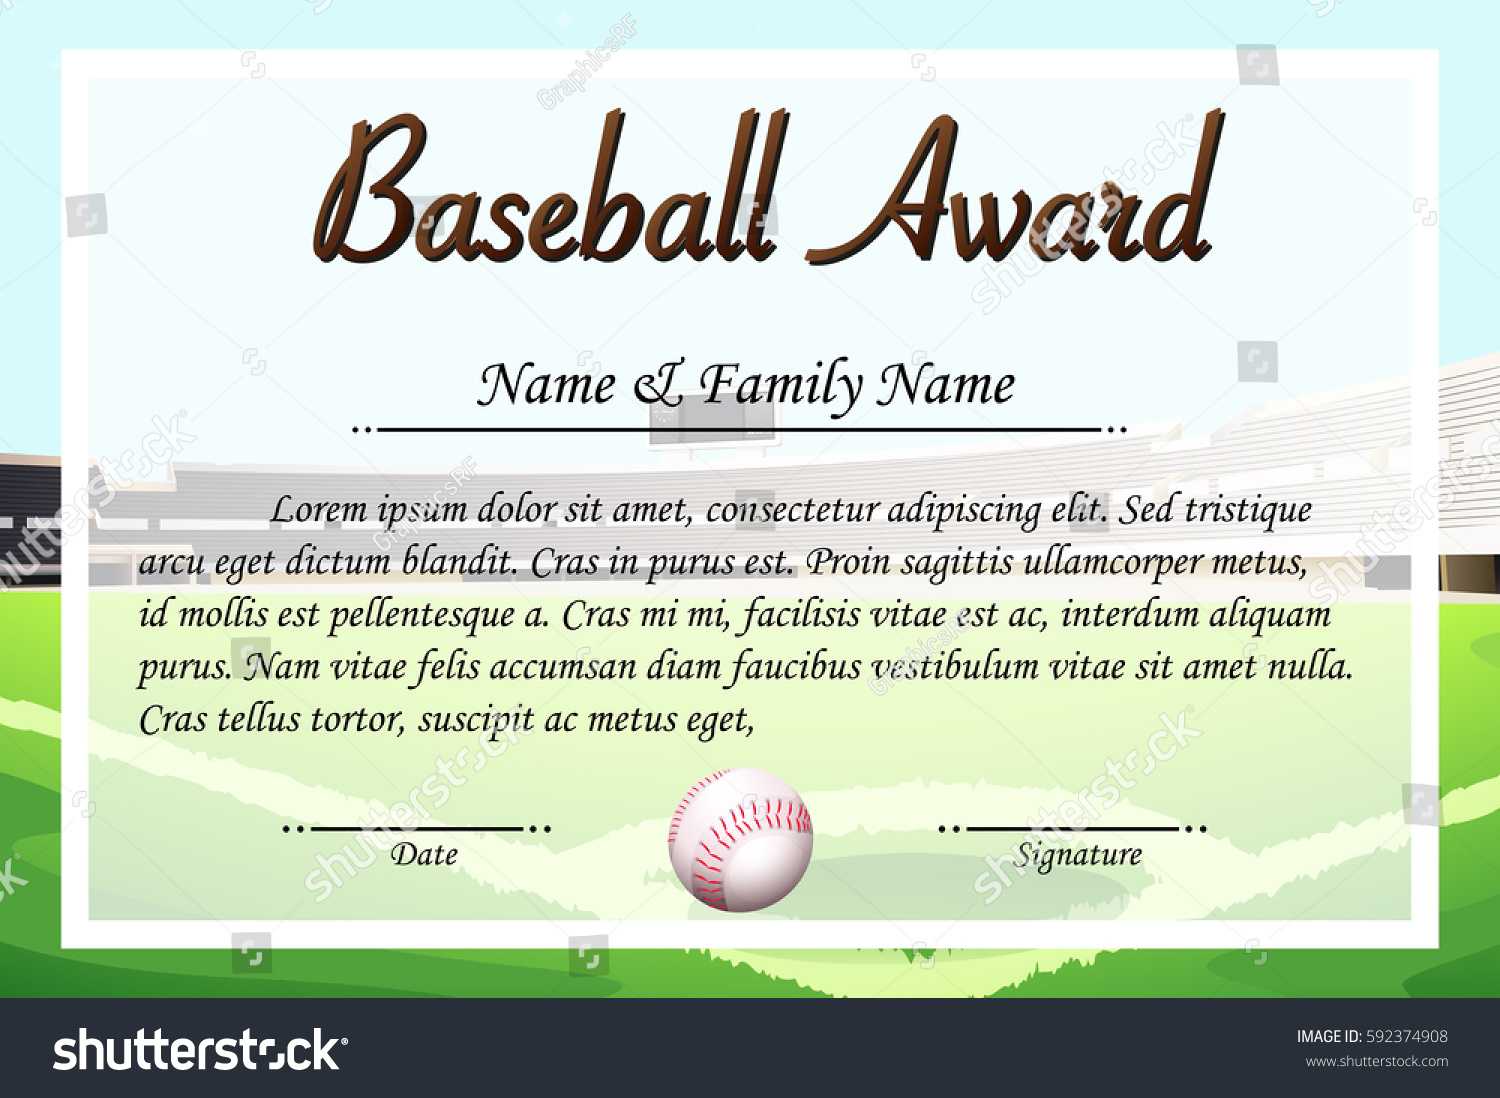 Certificate Template Baseball Award Illustration Stock With Regard To Free Softball Certificate Templates